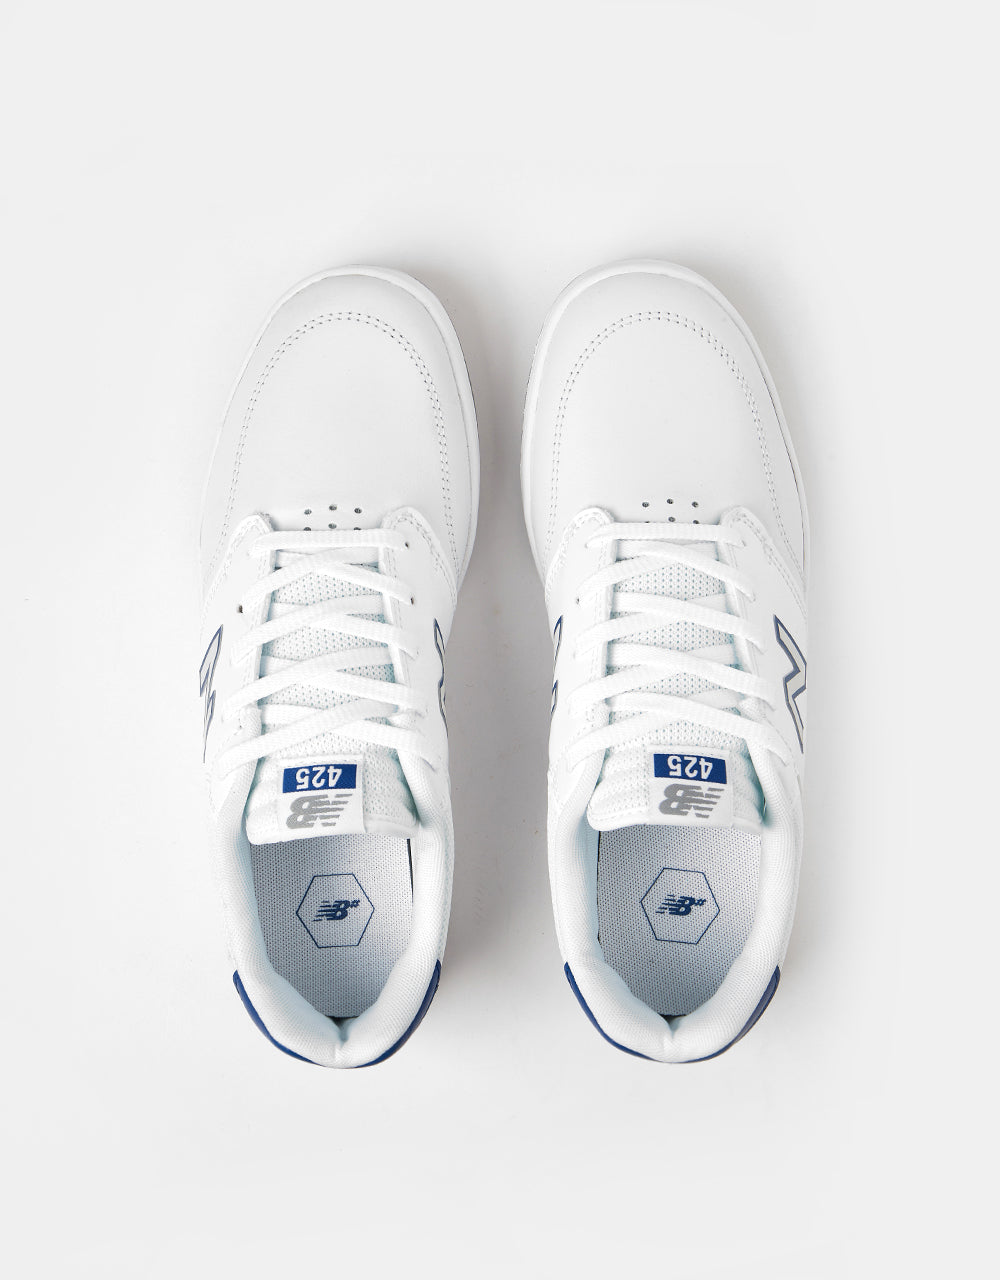 New Balance Numeric 425 Skate Shoes - White/Royal